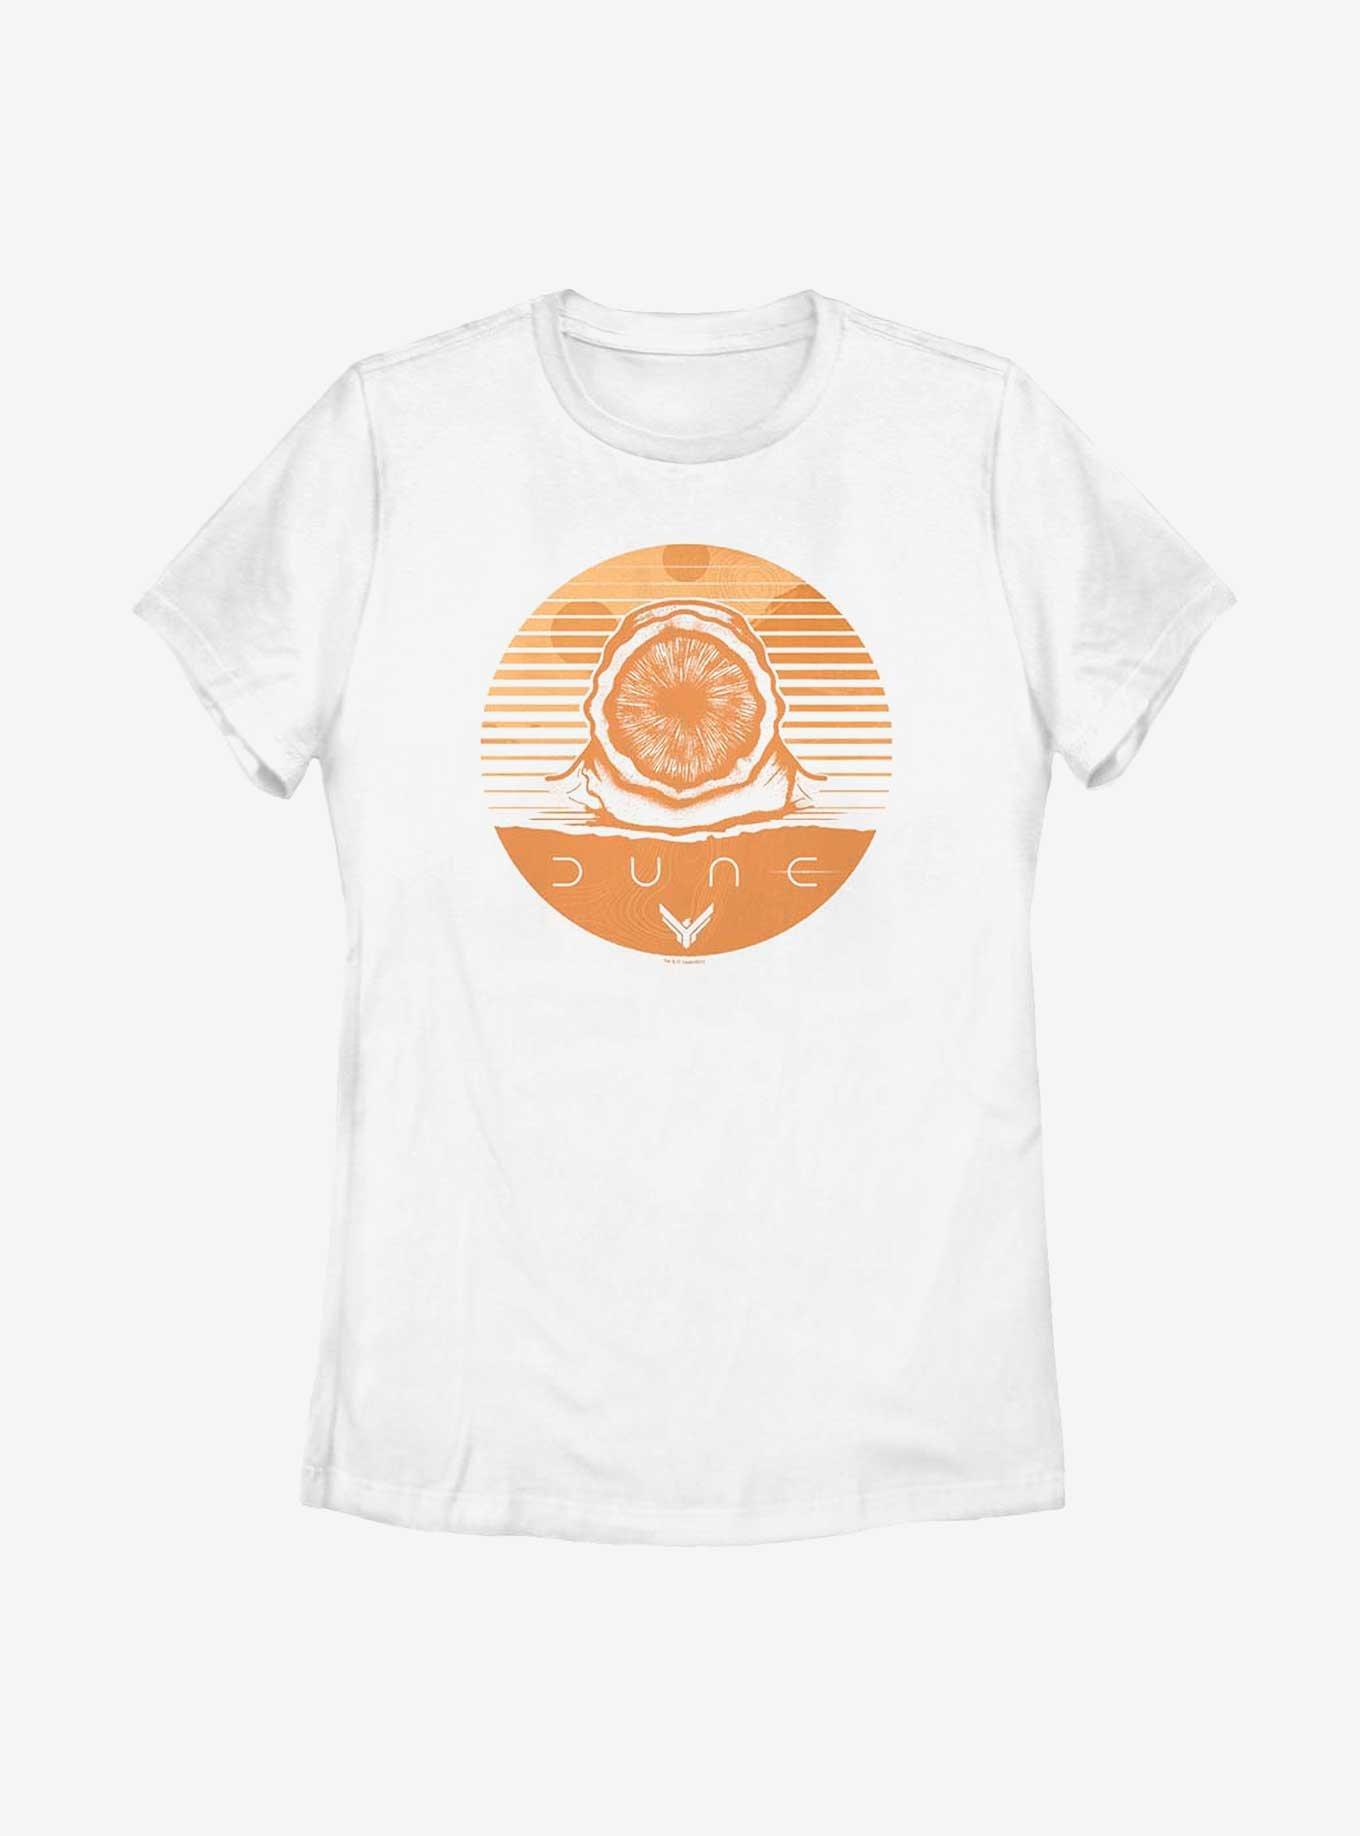 Dune Arrakis Stamp Womens T-Shirt, WHITE, hi-res